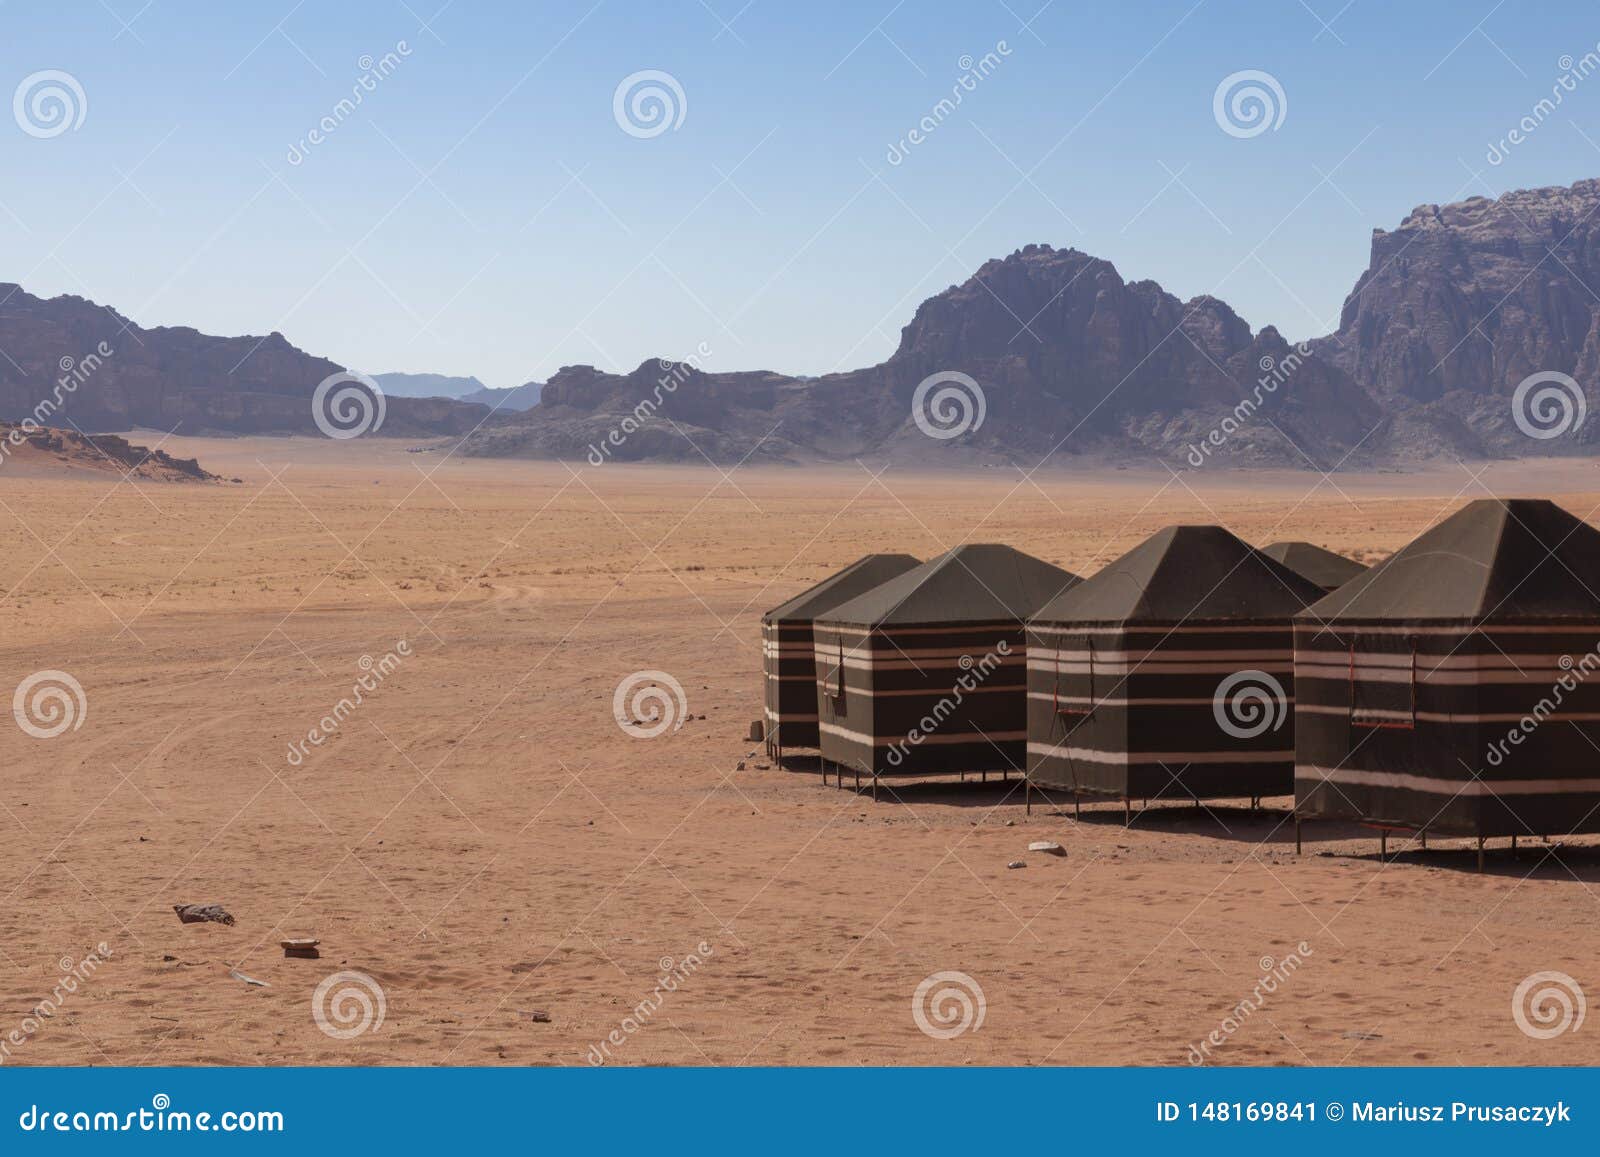 jordan desert camp